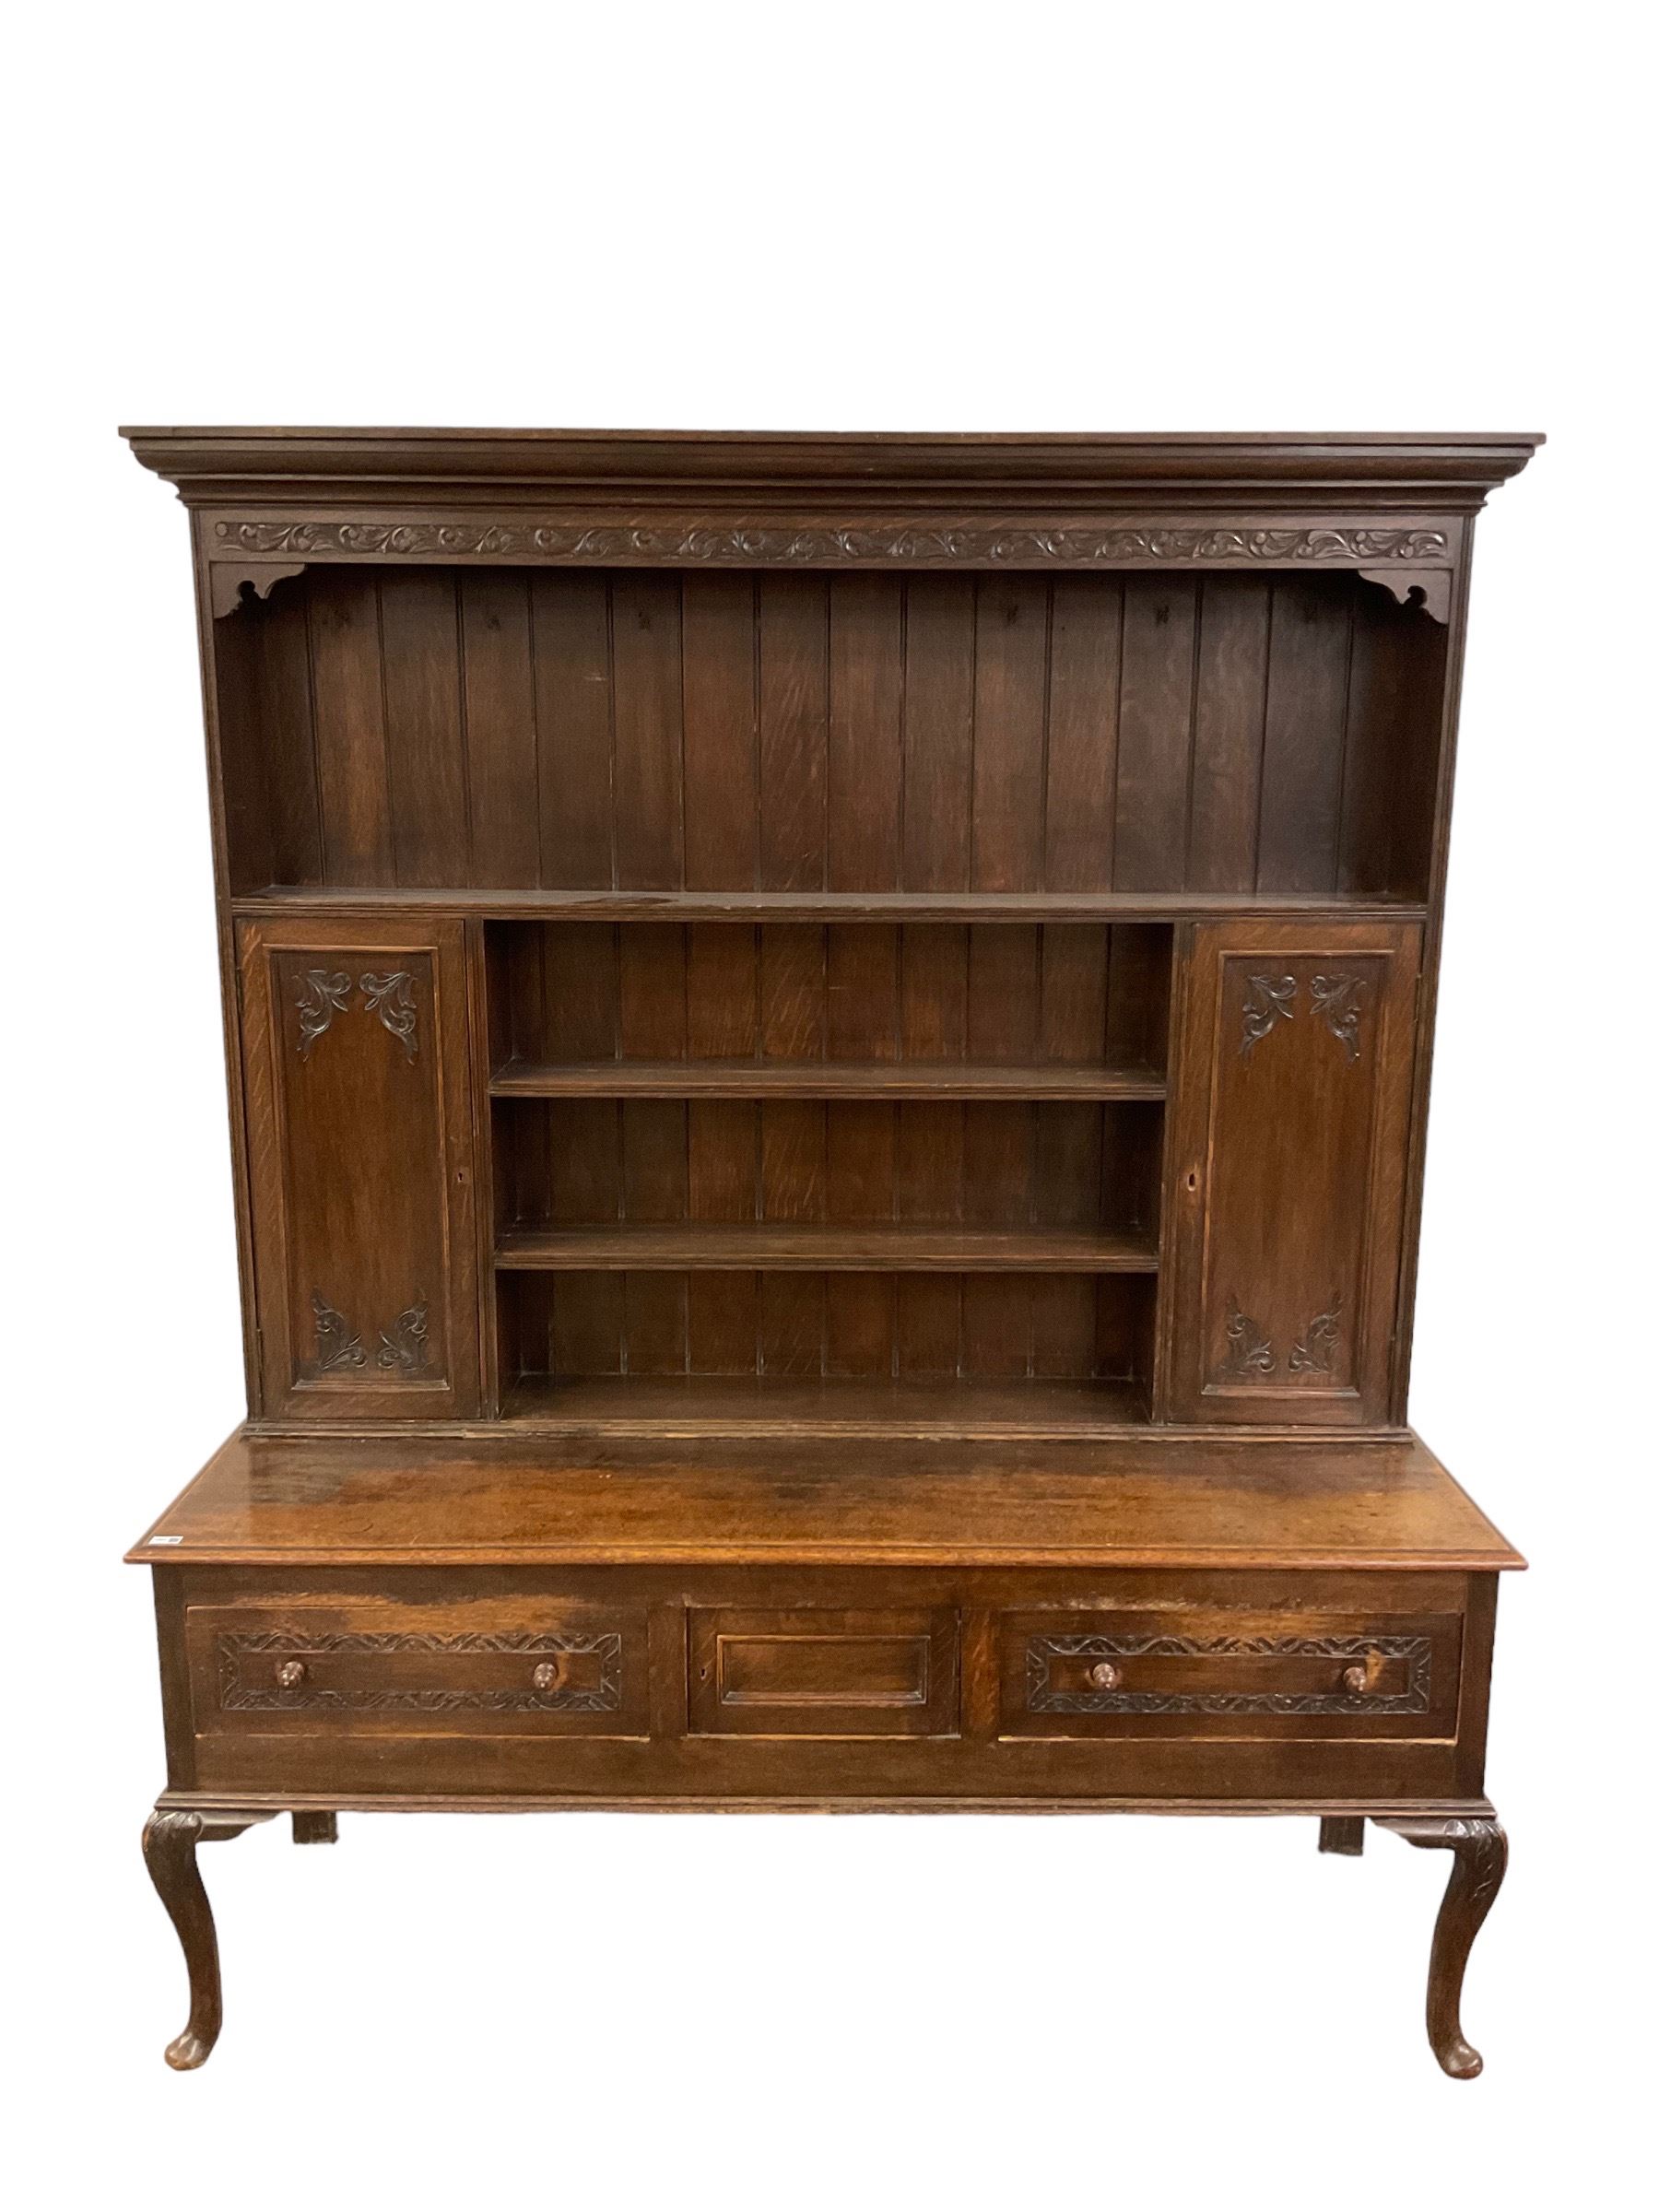 19th century oak dresser - Image 7 of 7